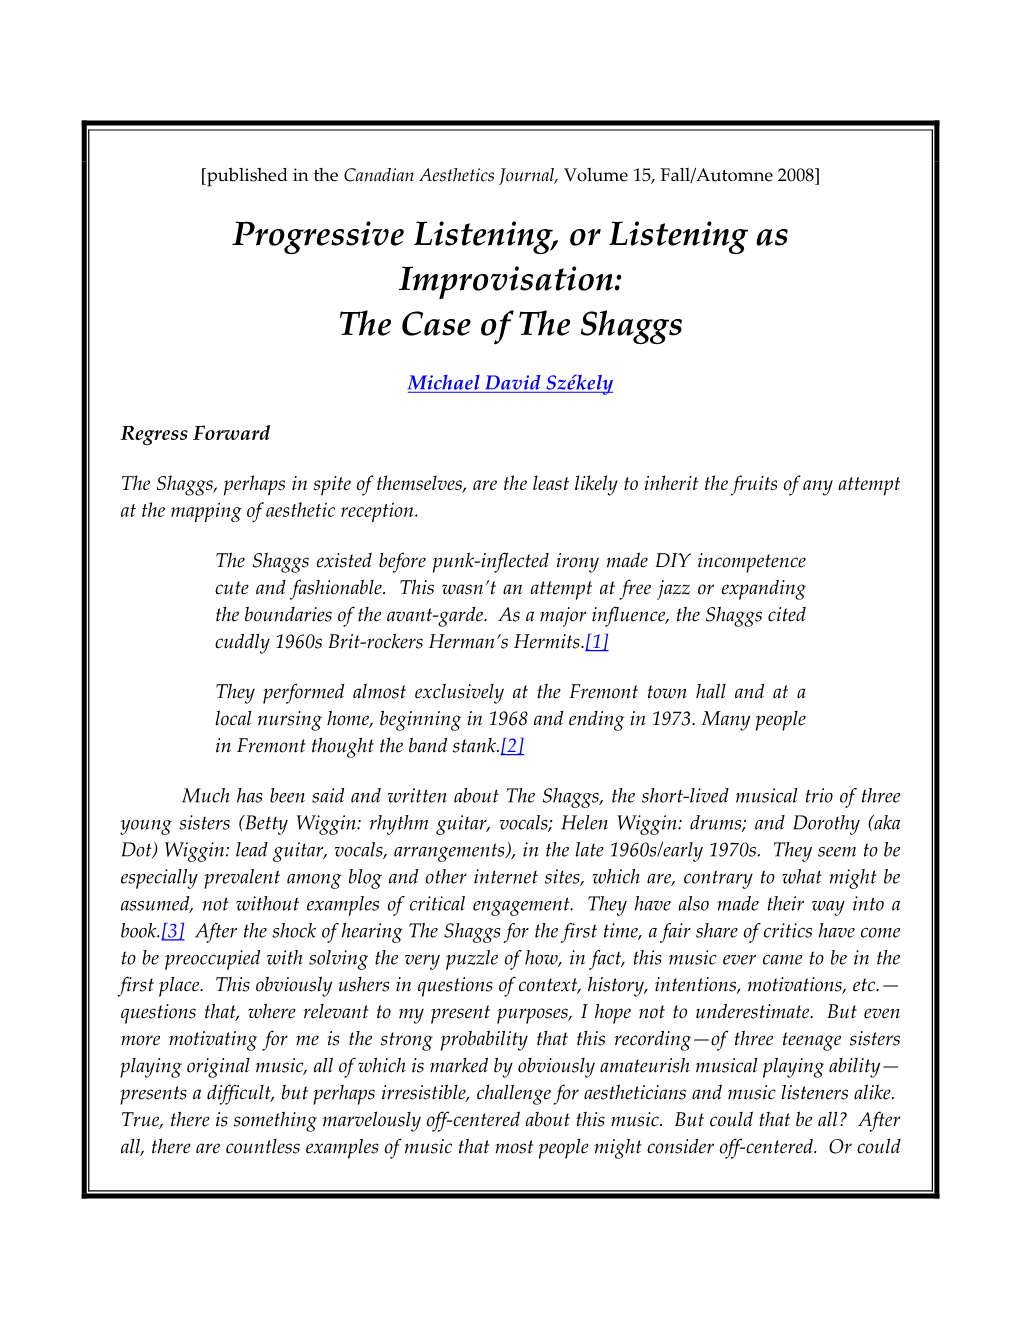 Progressive Listening, Or Listening As Improvisation: the Case of the Shaggs